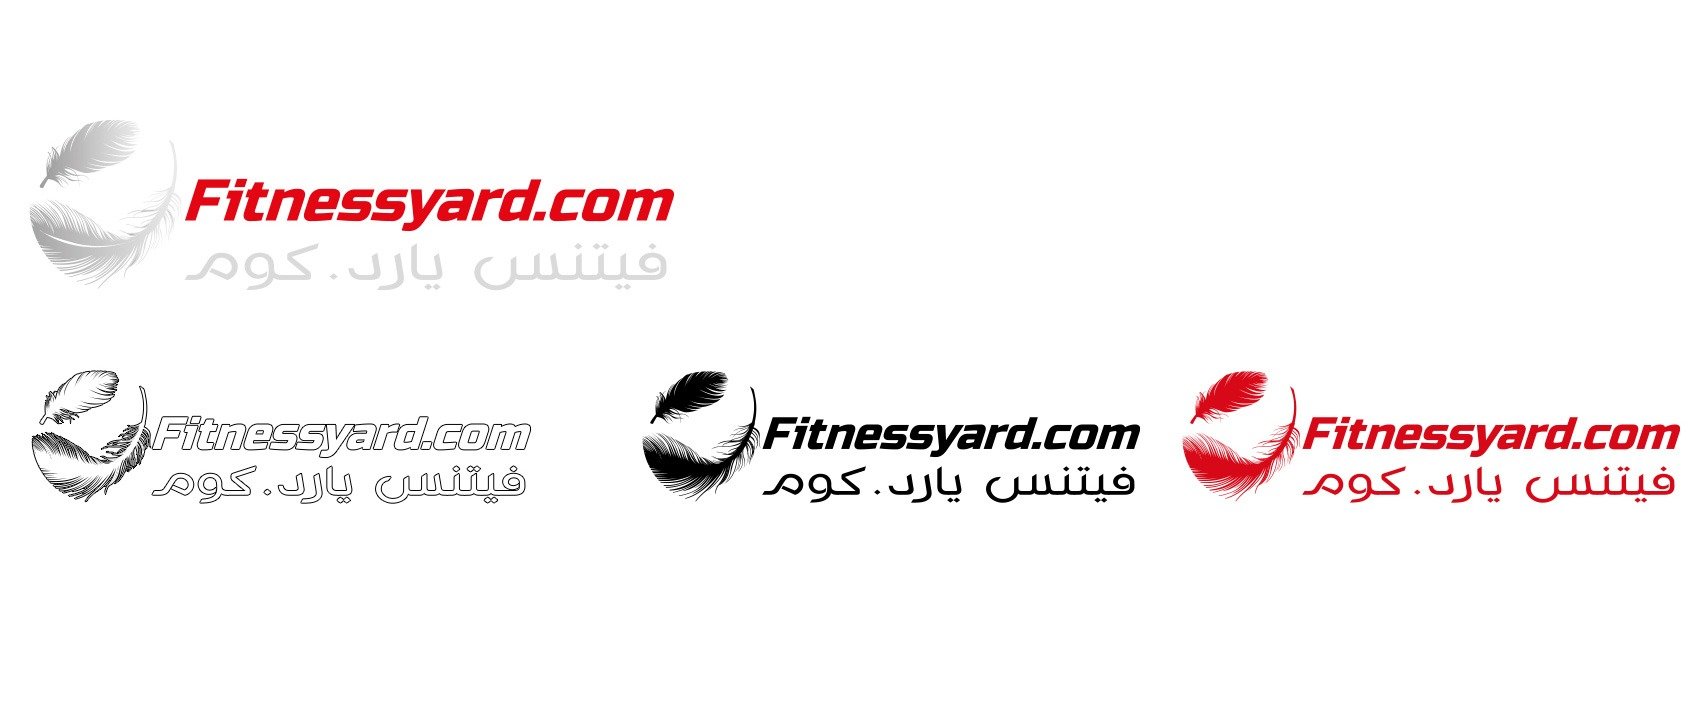 fitnessyard logo colors variations